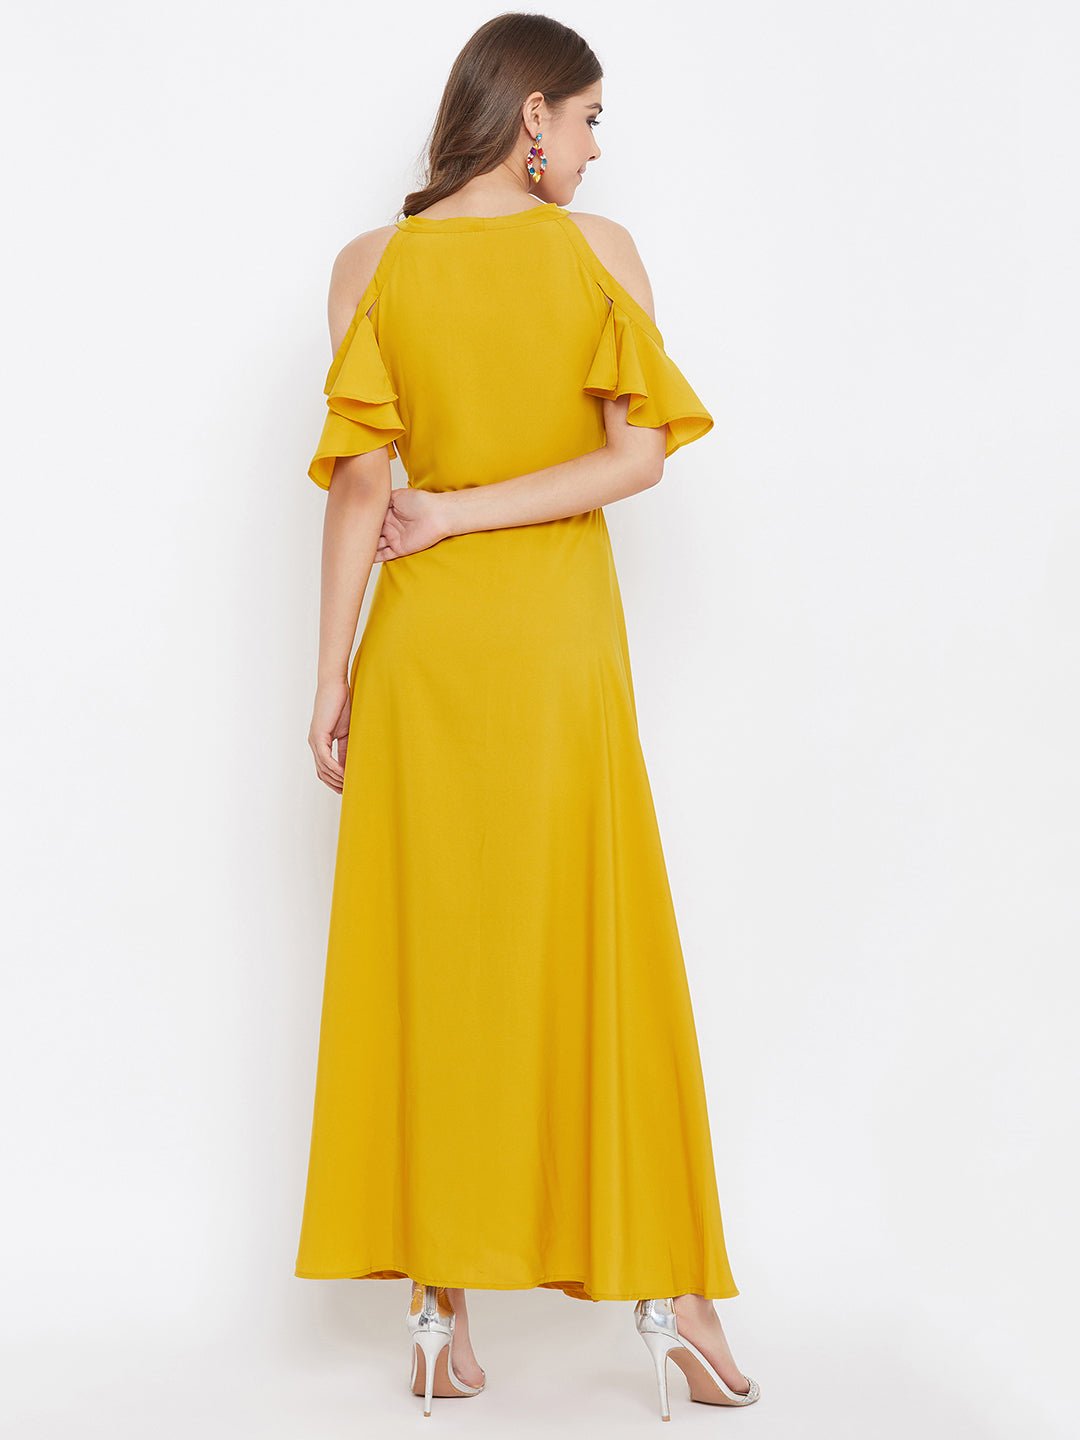 Folk Republic Women Solid Yellow Cold Shoulder Wrap Maxi Dress - #folk republic#